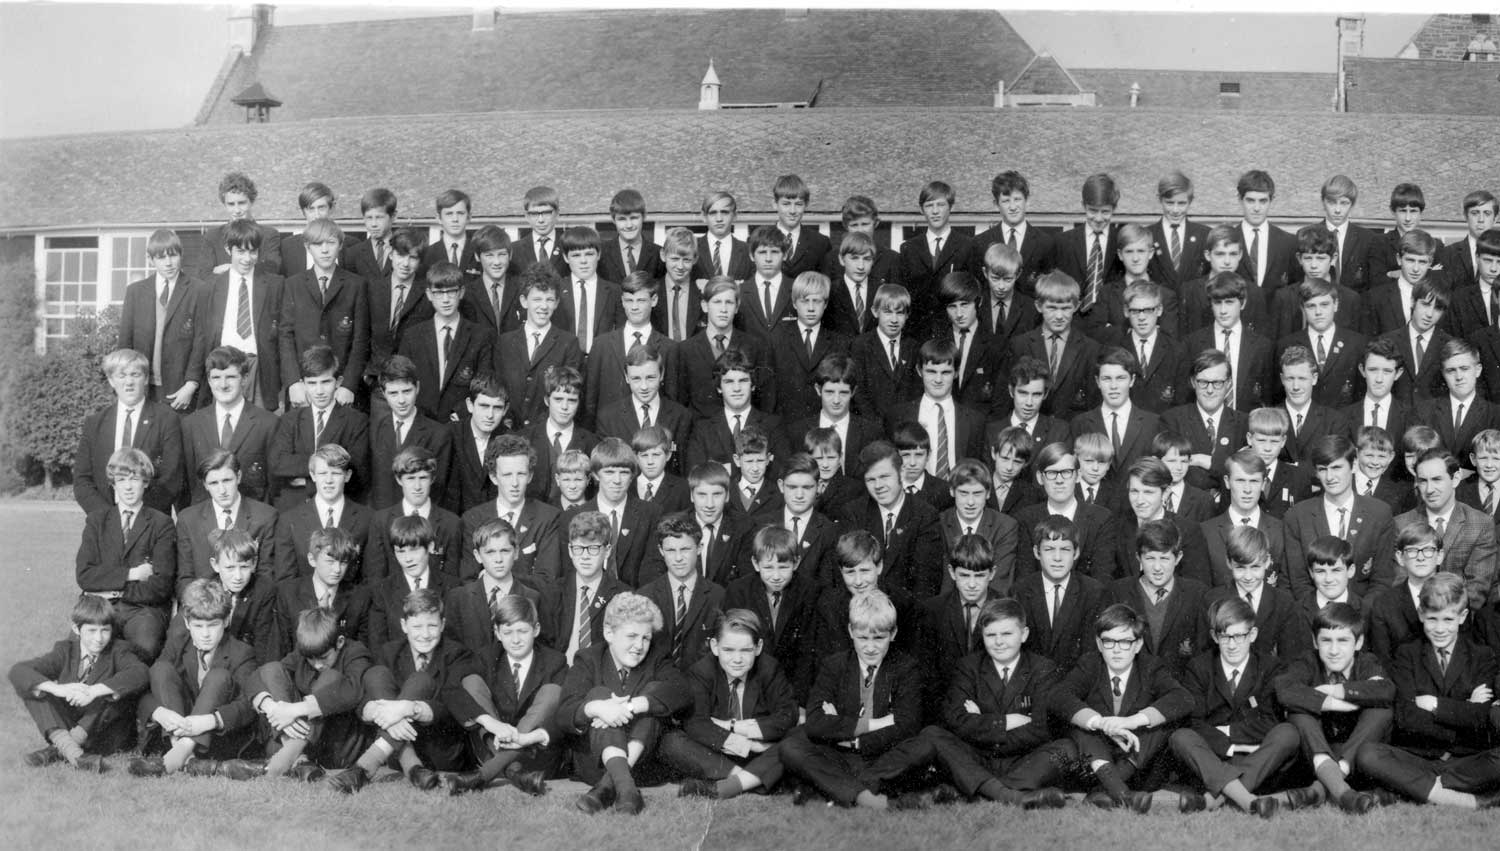 Image : LGS School Photo 1969 (158k)